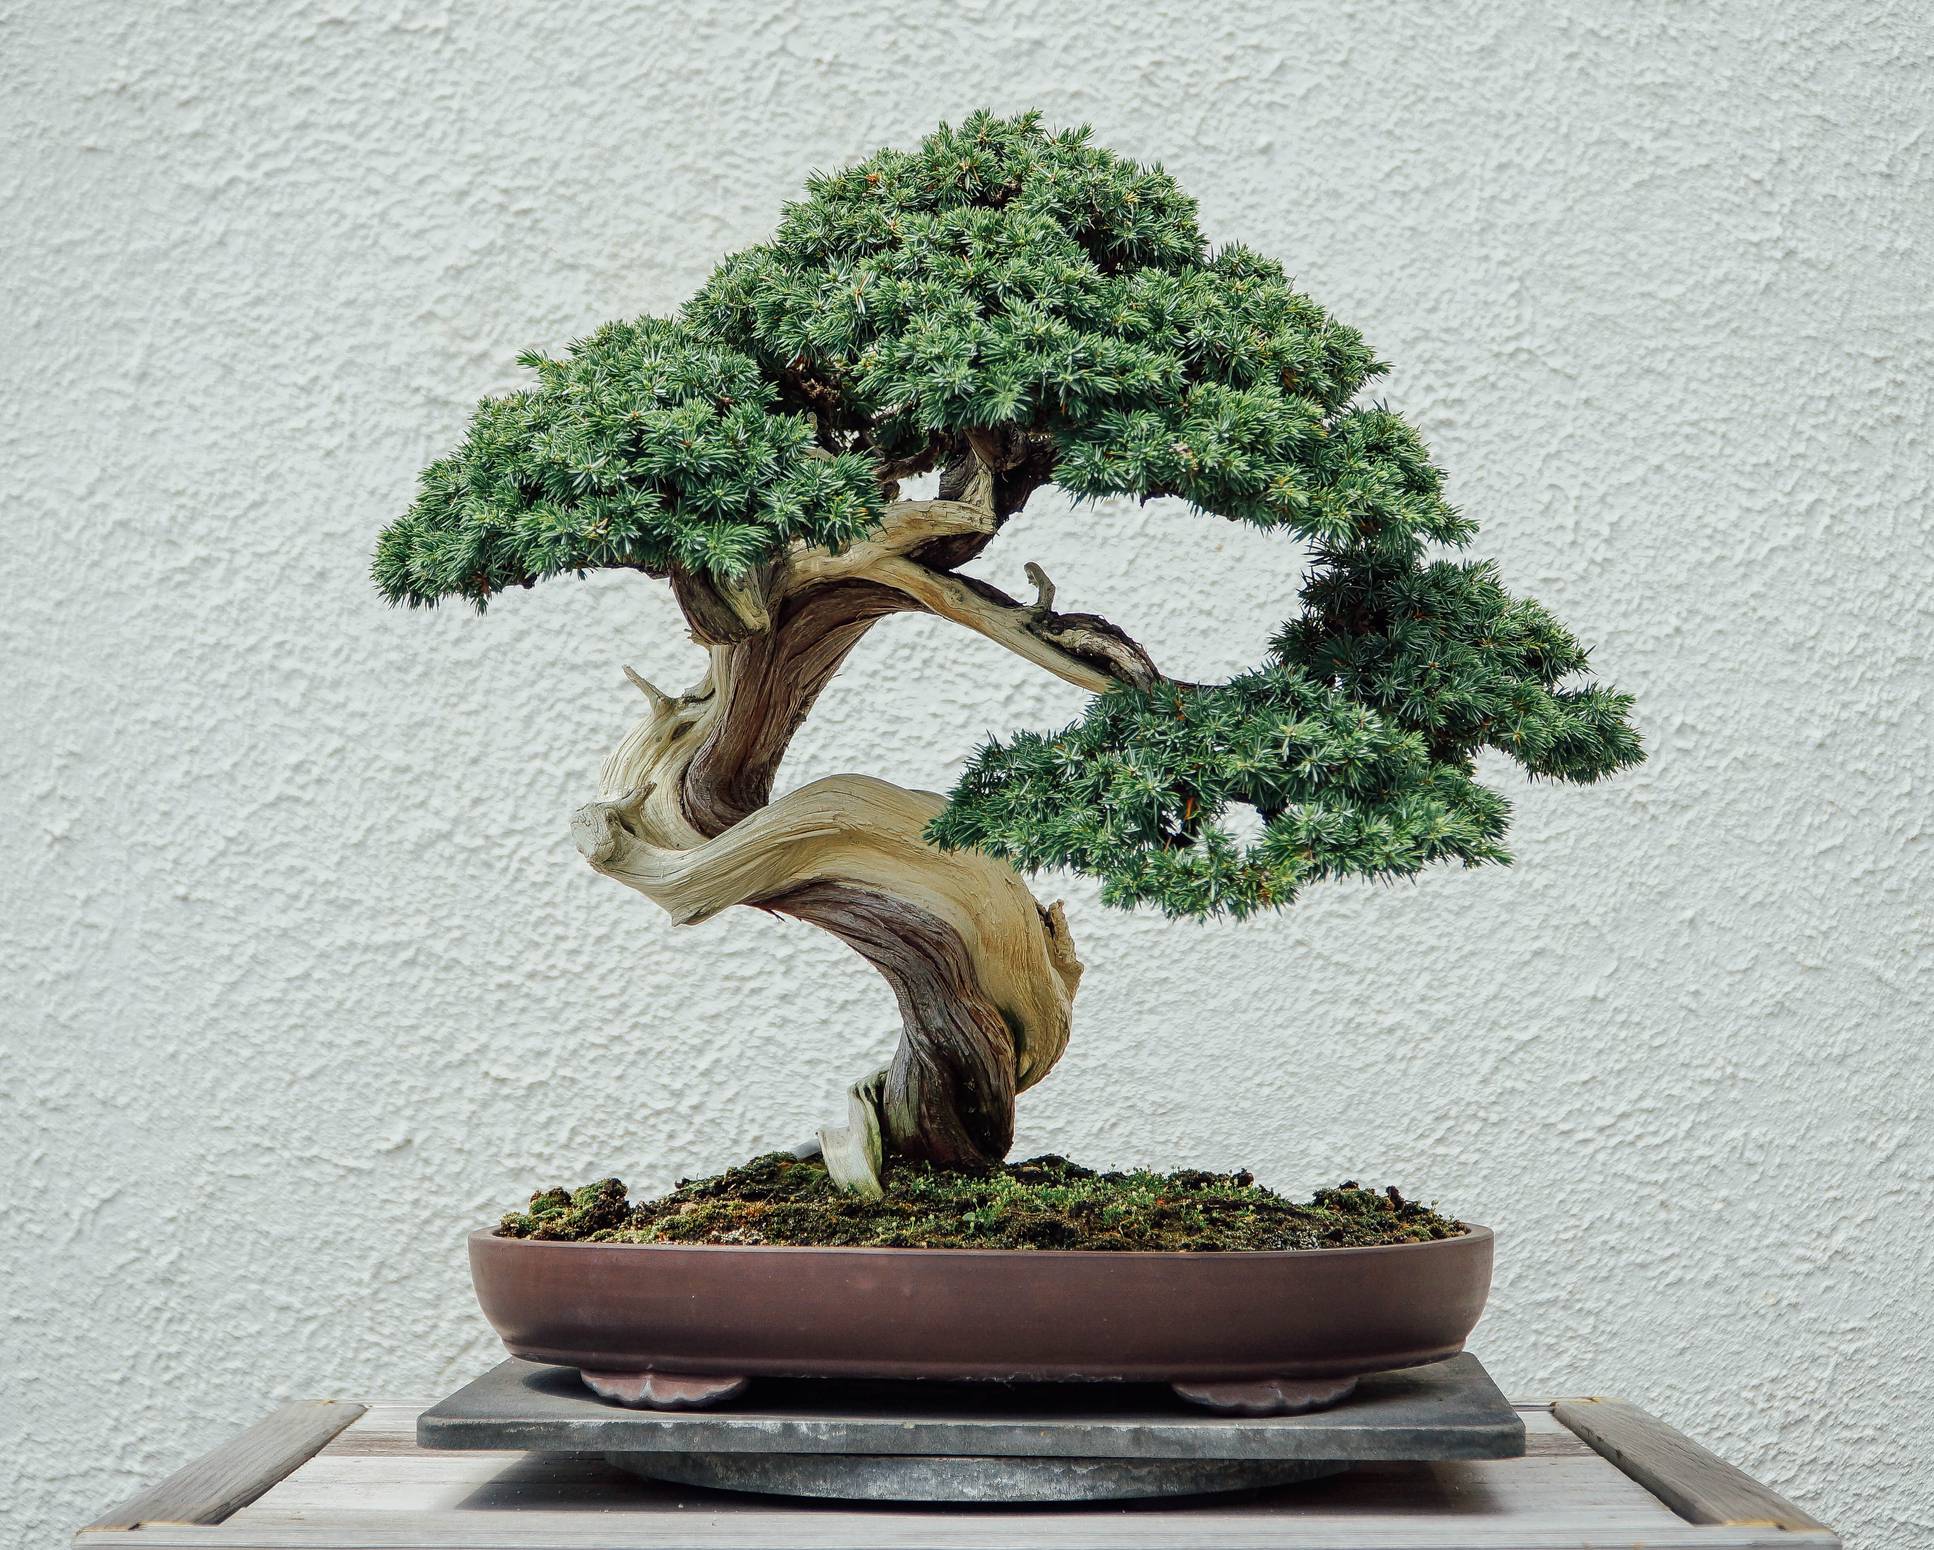 Can a bonsai tree live in Canada